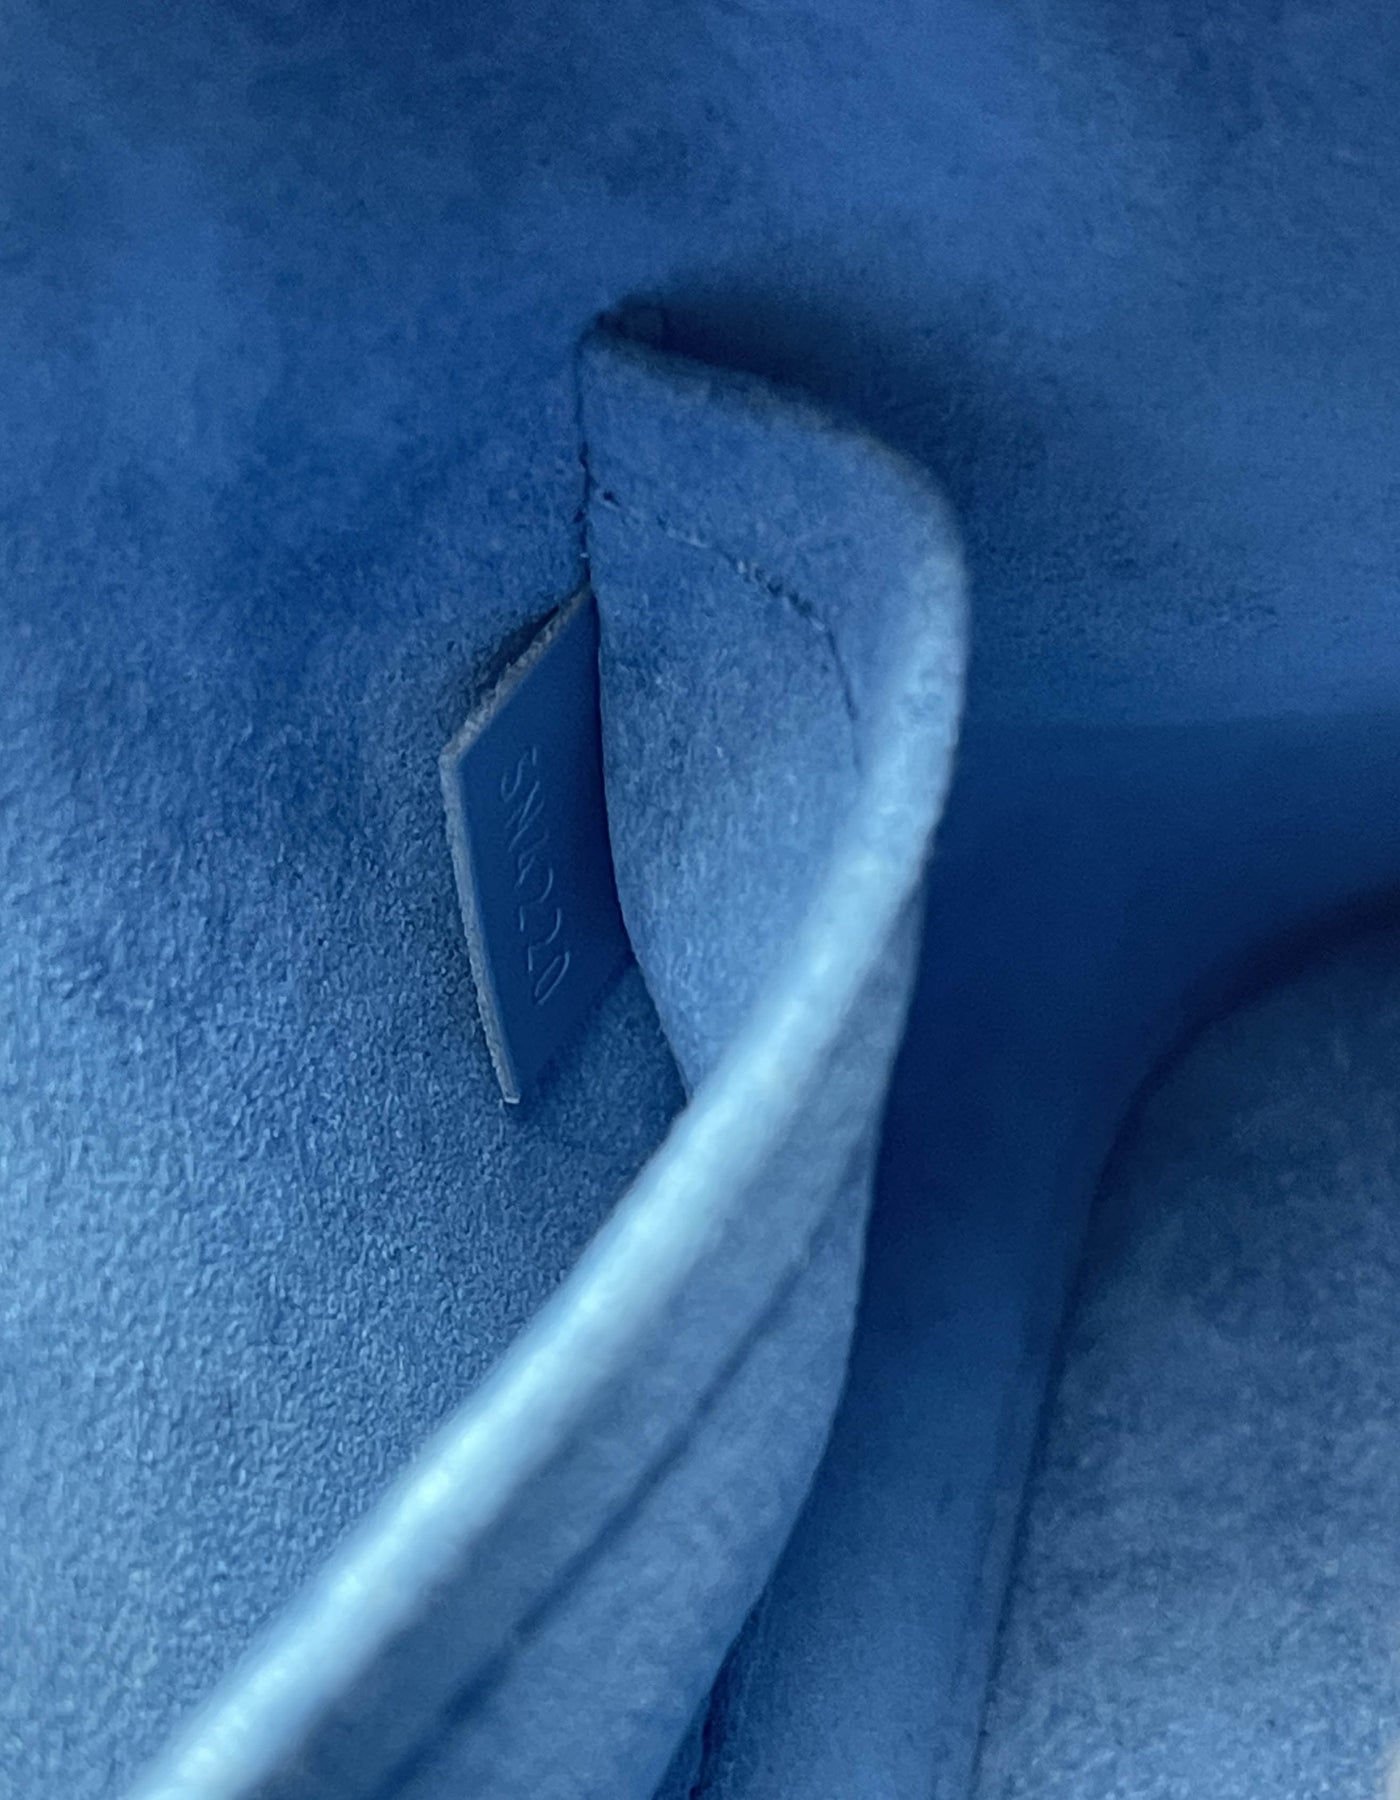 Louis Vuitton SOLD OUT Bleuet Blue Epi Jacquard Alma BB Crossbody Bag